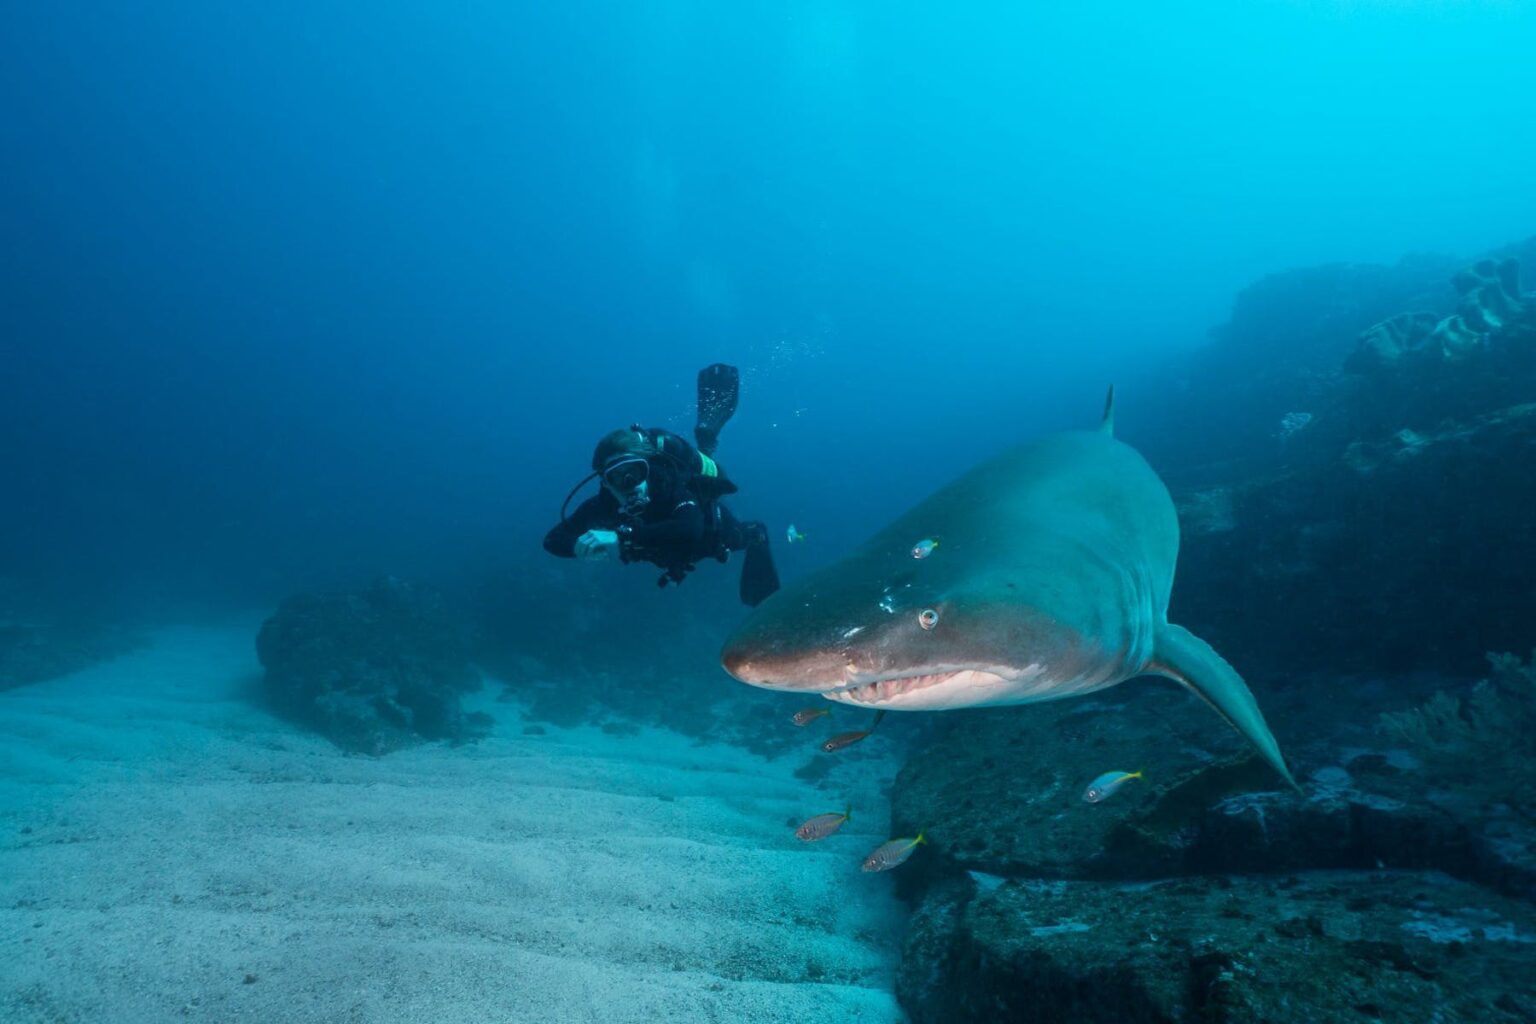 A doiver cruising not far from a Grey Nurse Shark in clear blue water